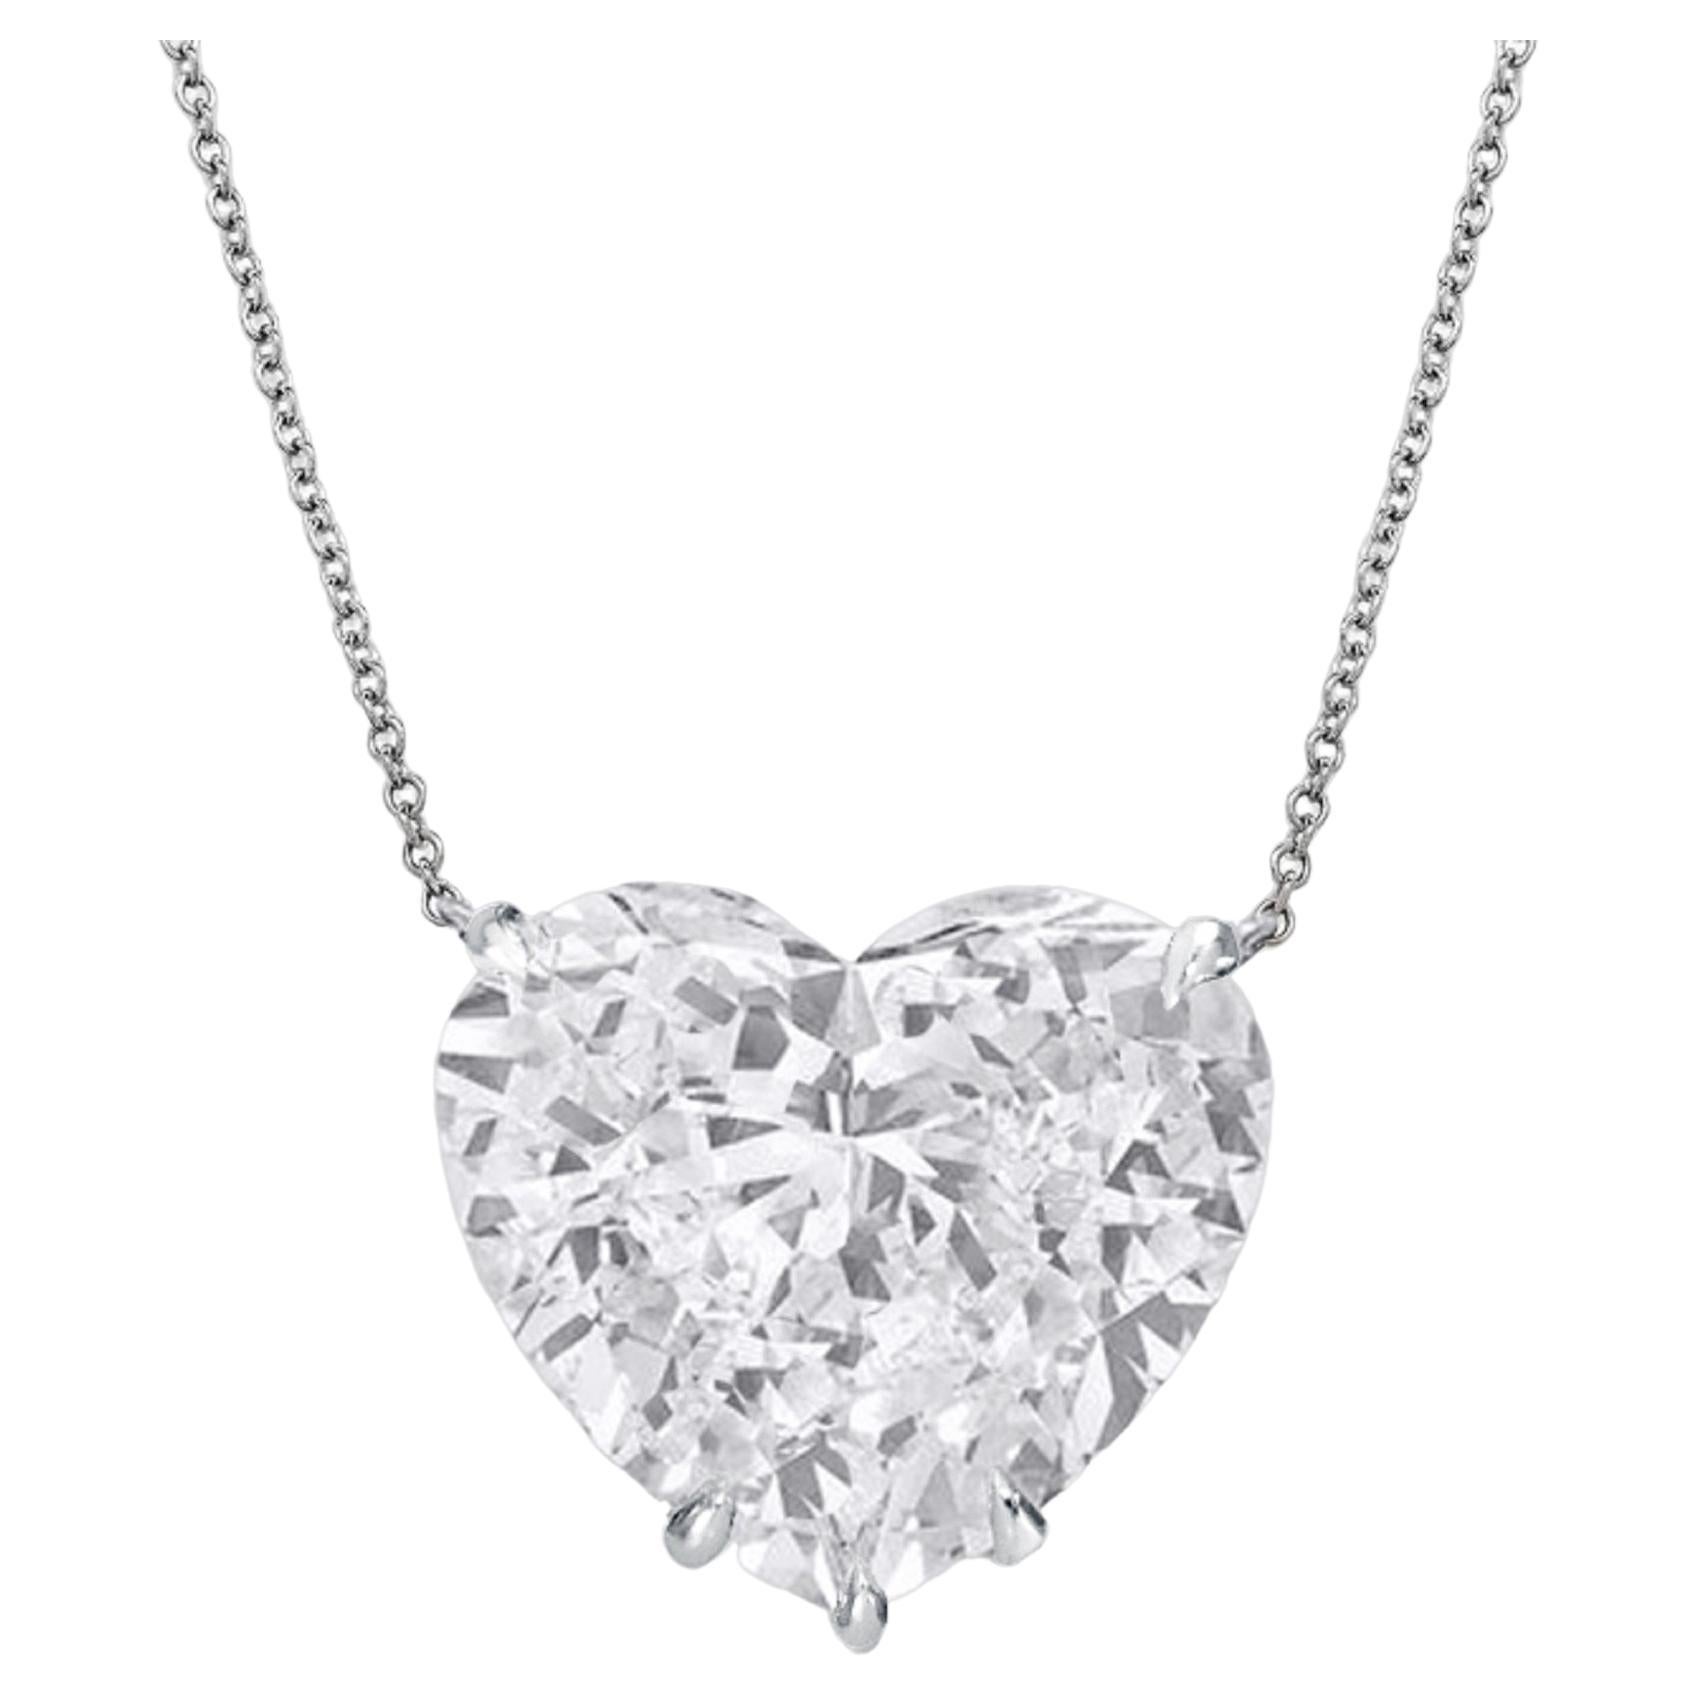 GIA Certified 4 Carat Heart Shape Diamond Platinum Necklace
F COLOR
VVS2
INVESTMENT GRADE